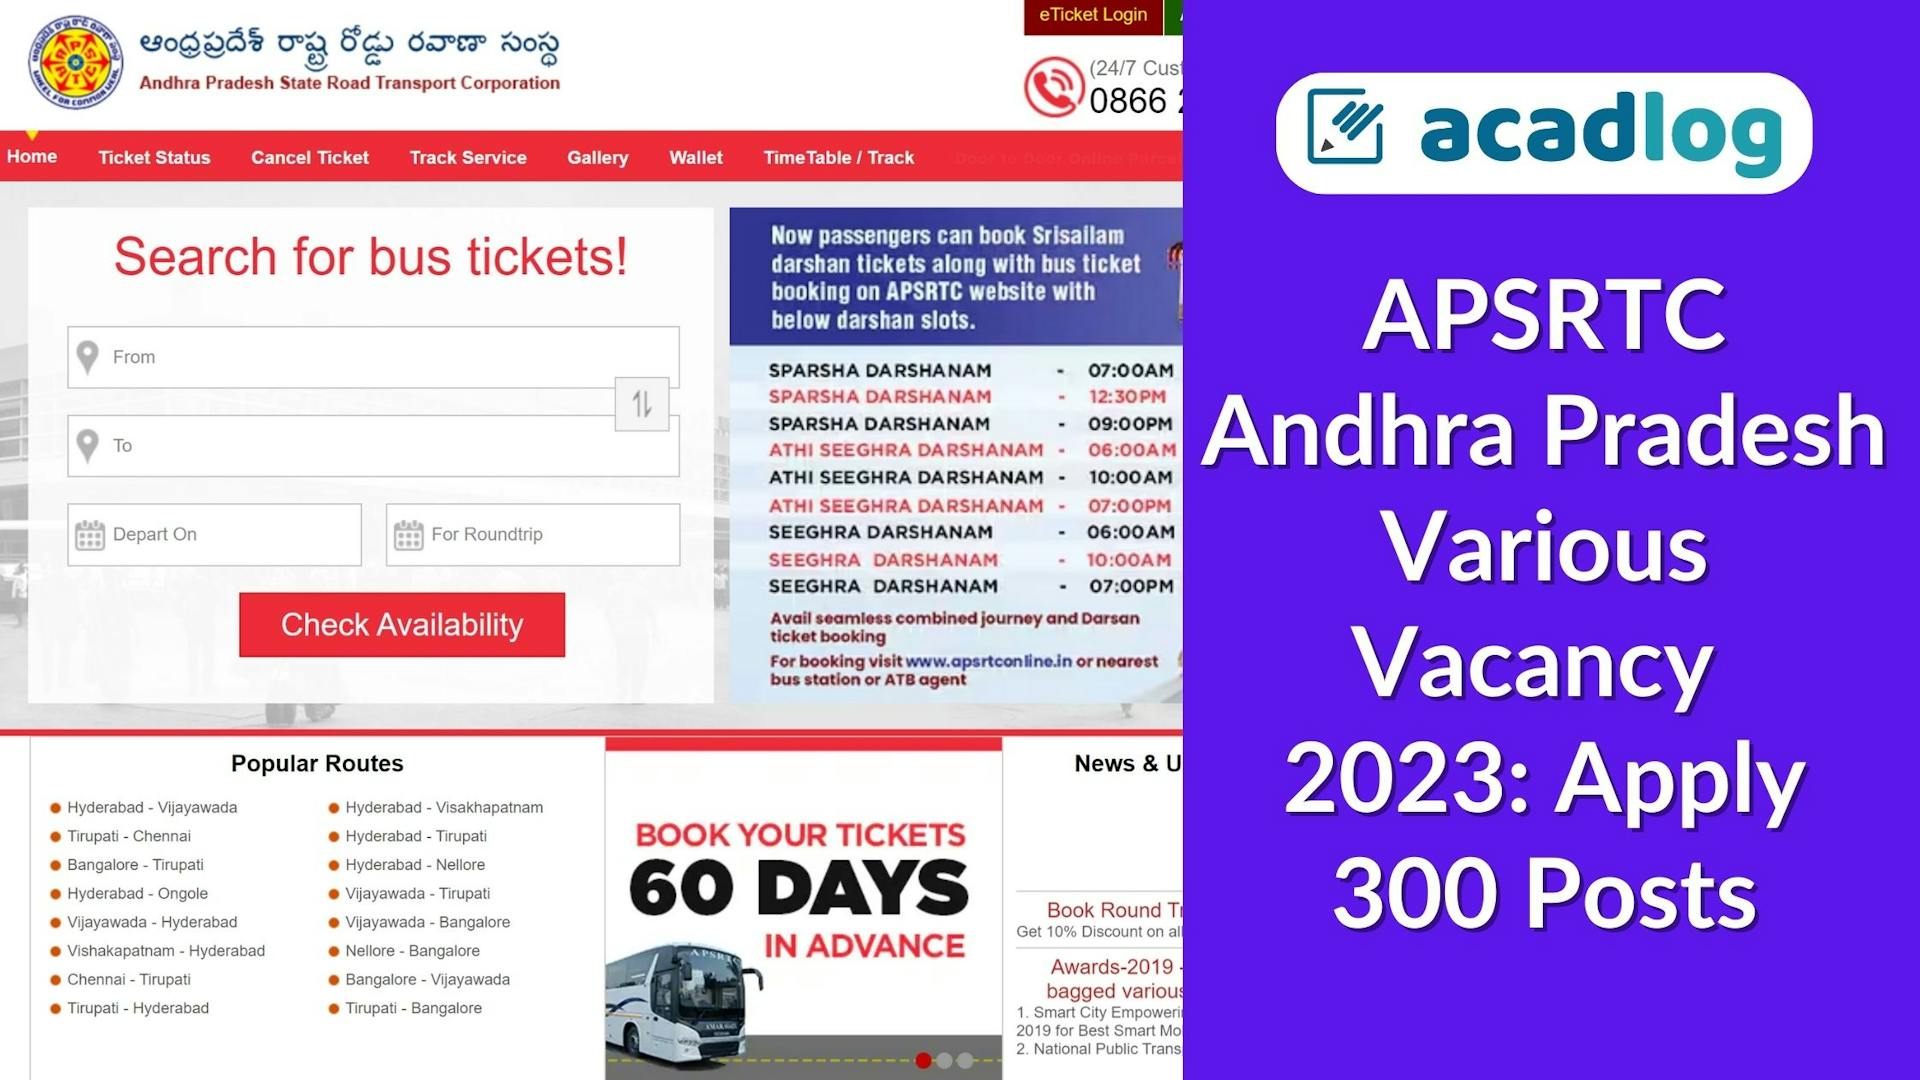 APSRTC Andhra Pradesh Various Vacancy 2023: Apply 300 Posts